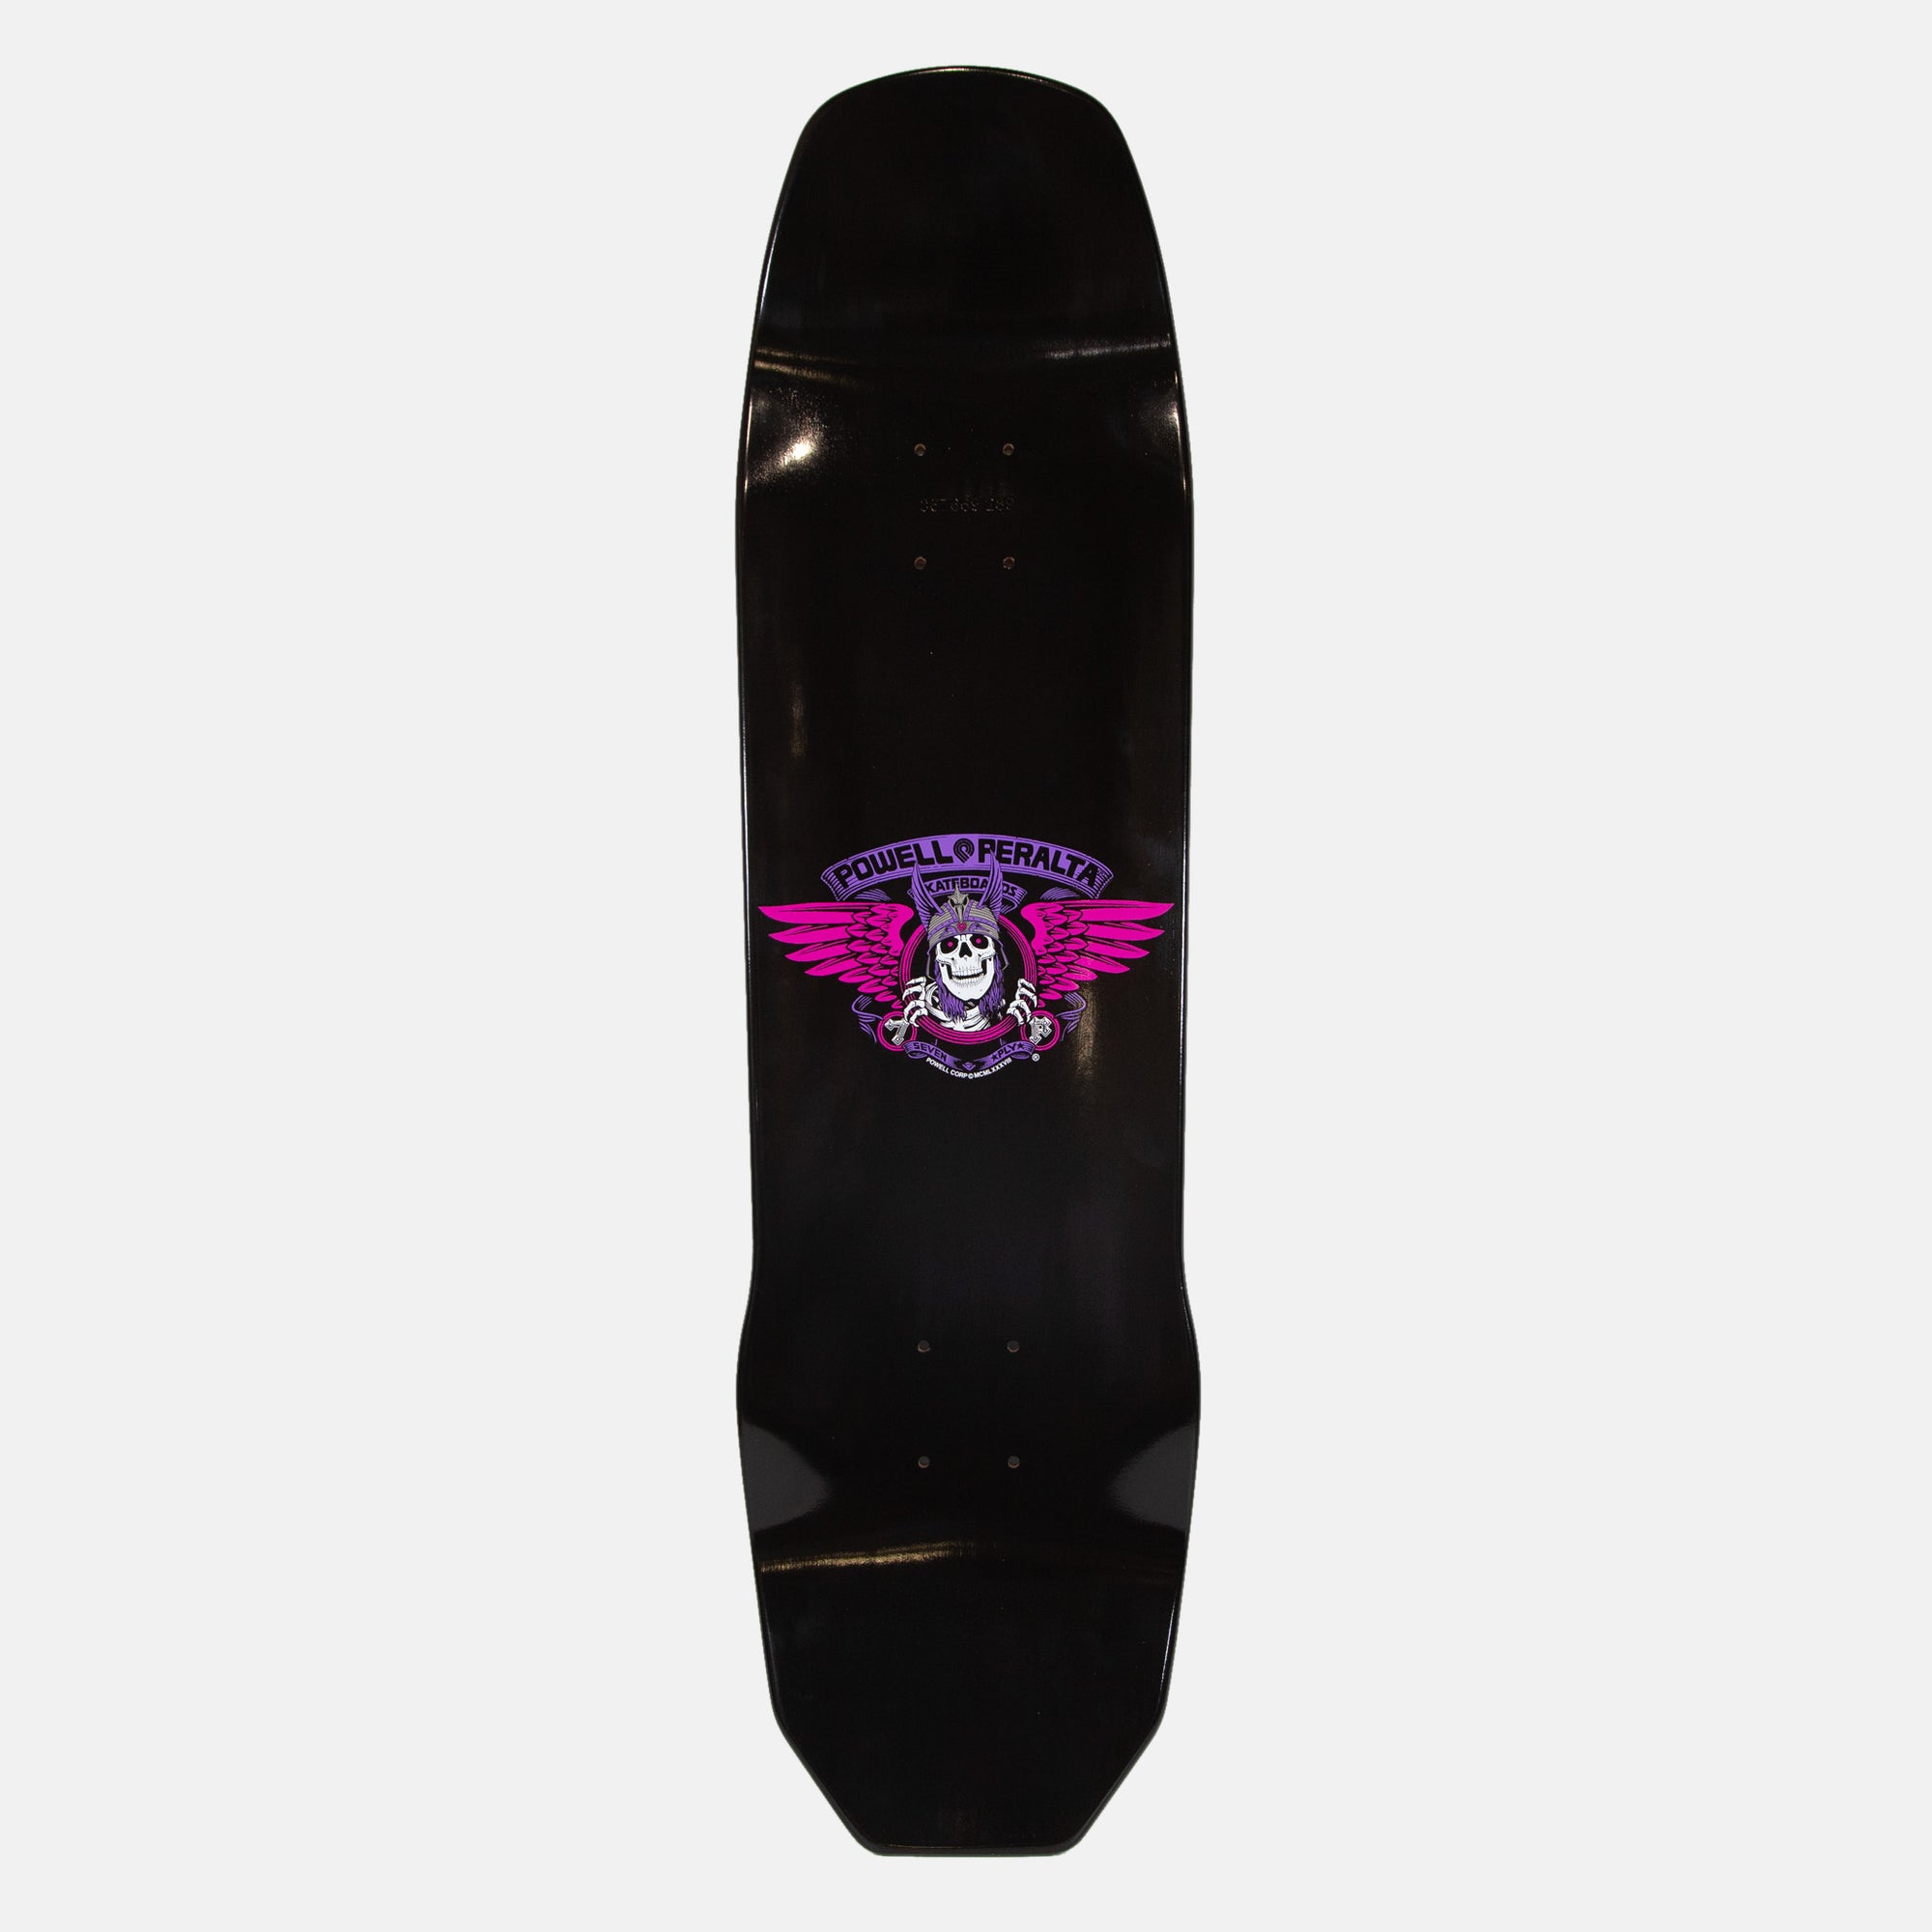 Powell Peralta - 8.45" Andy Anderson Heron Skull Skateboard Deck (Shape 289)